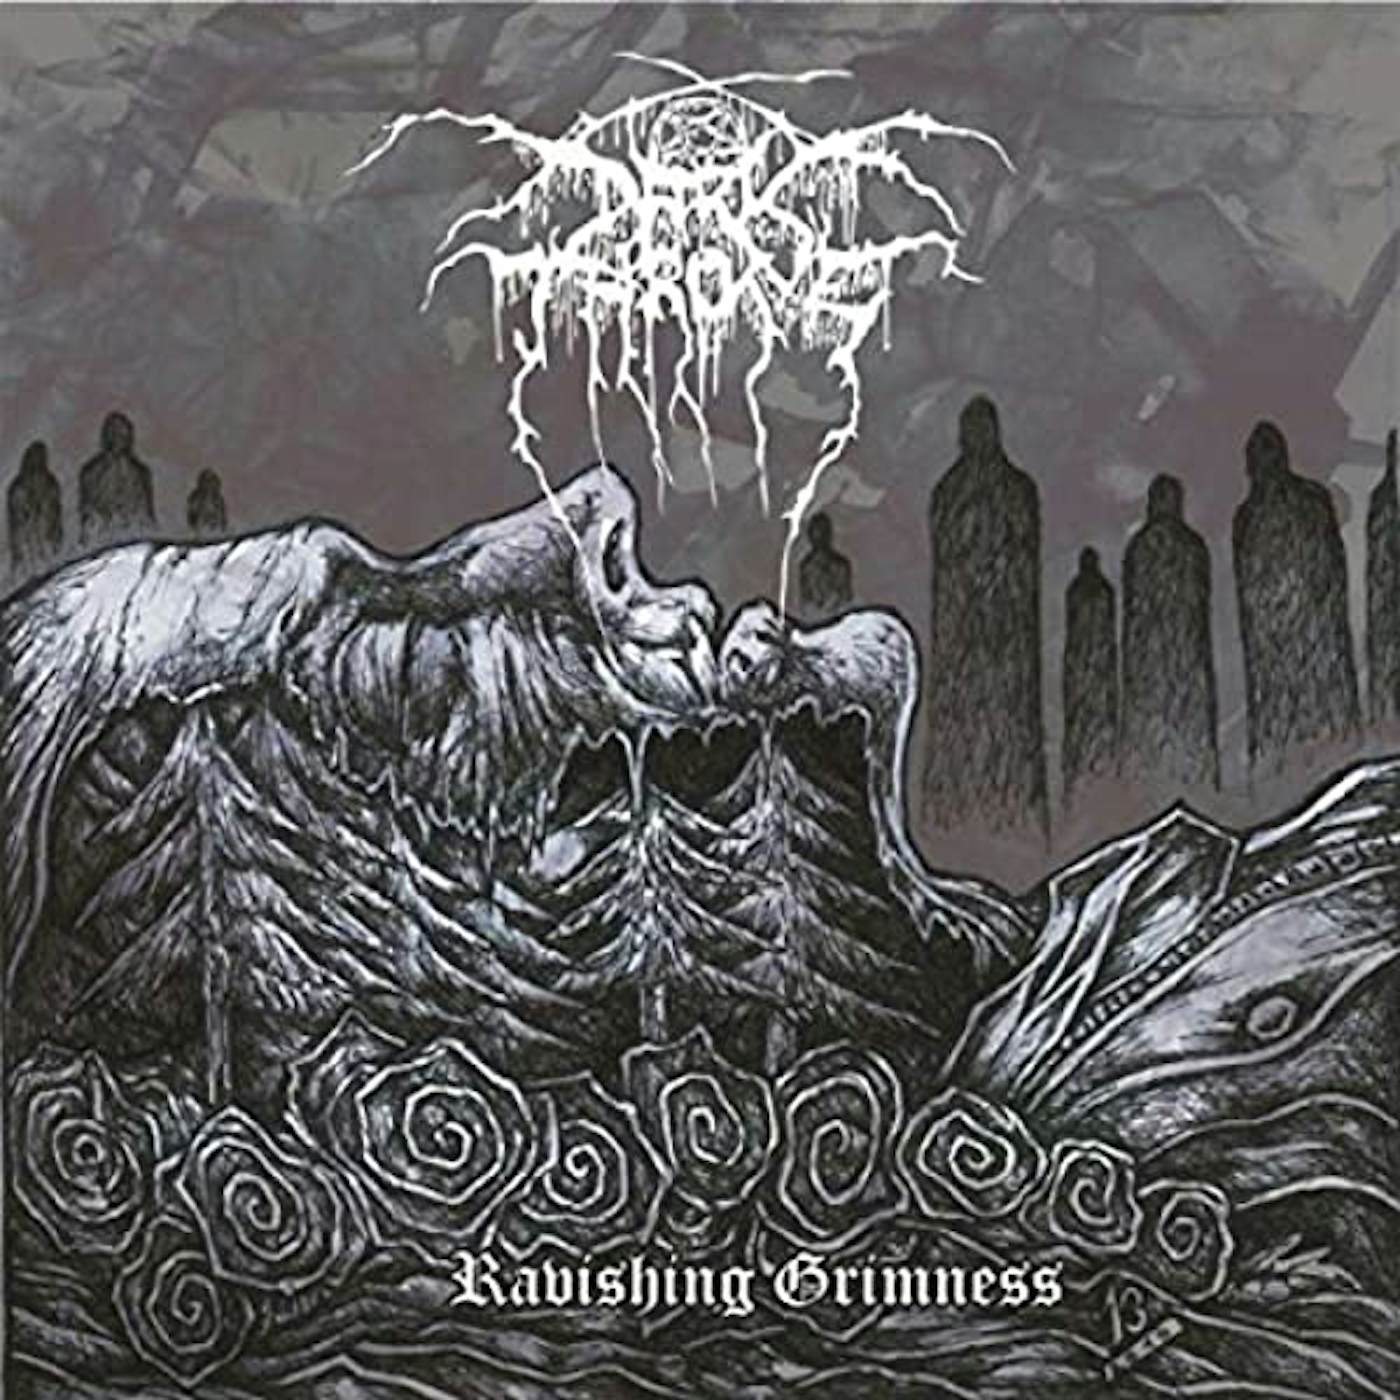 Darkthrone Ravishing Grimness vinyl record